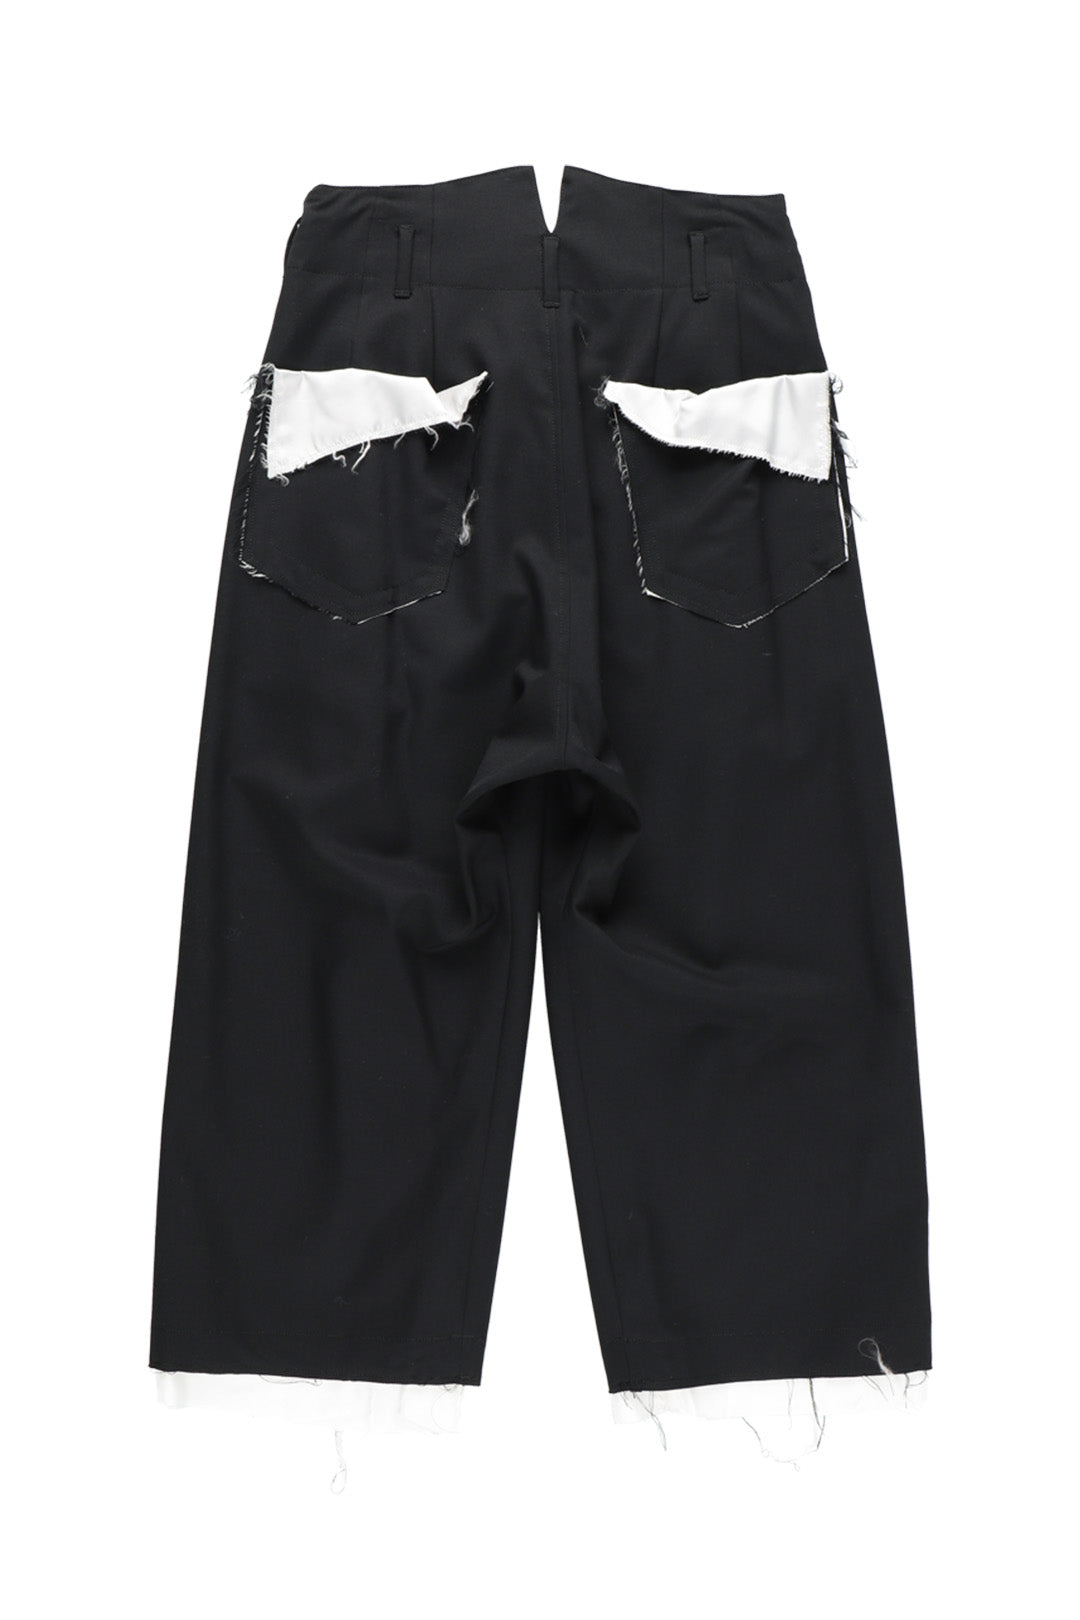 sulvam Classic pants black AW22 | sulvam online store